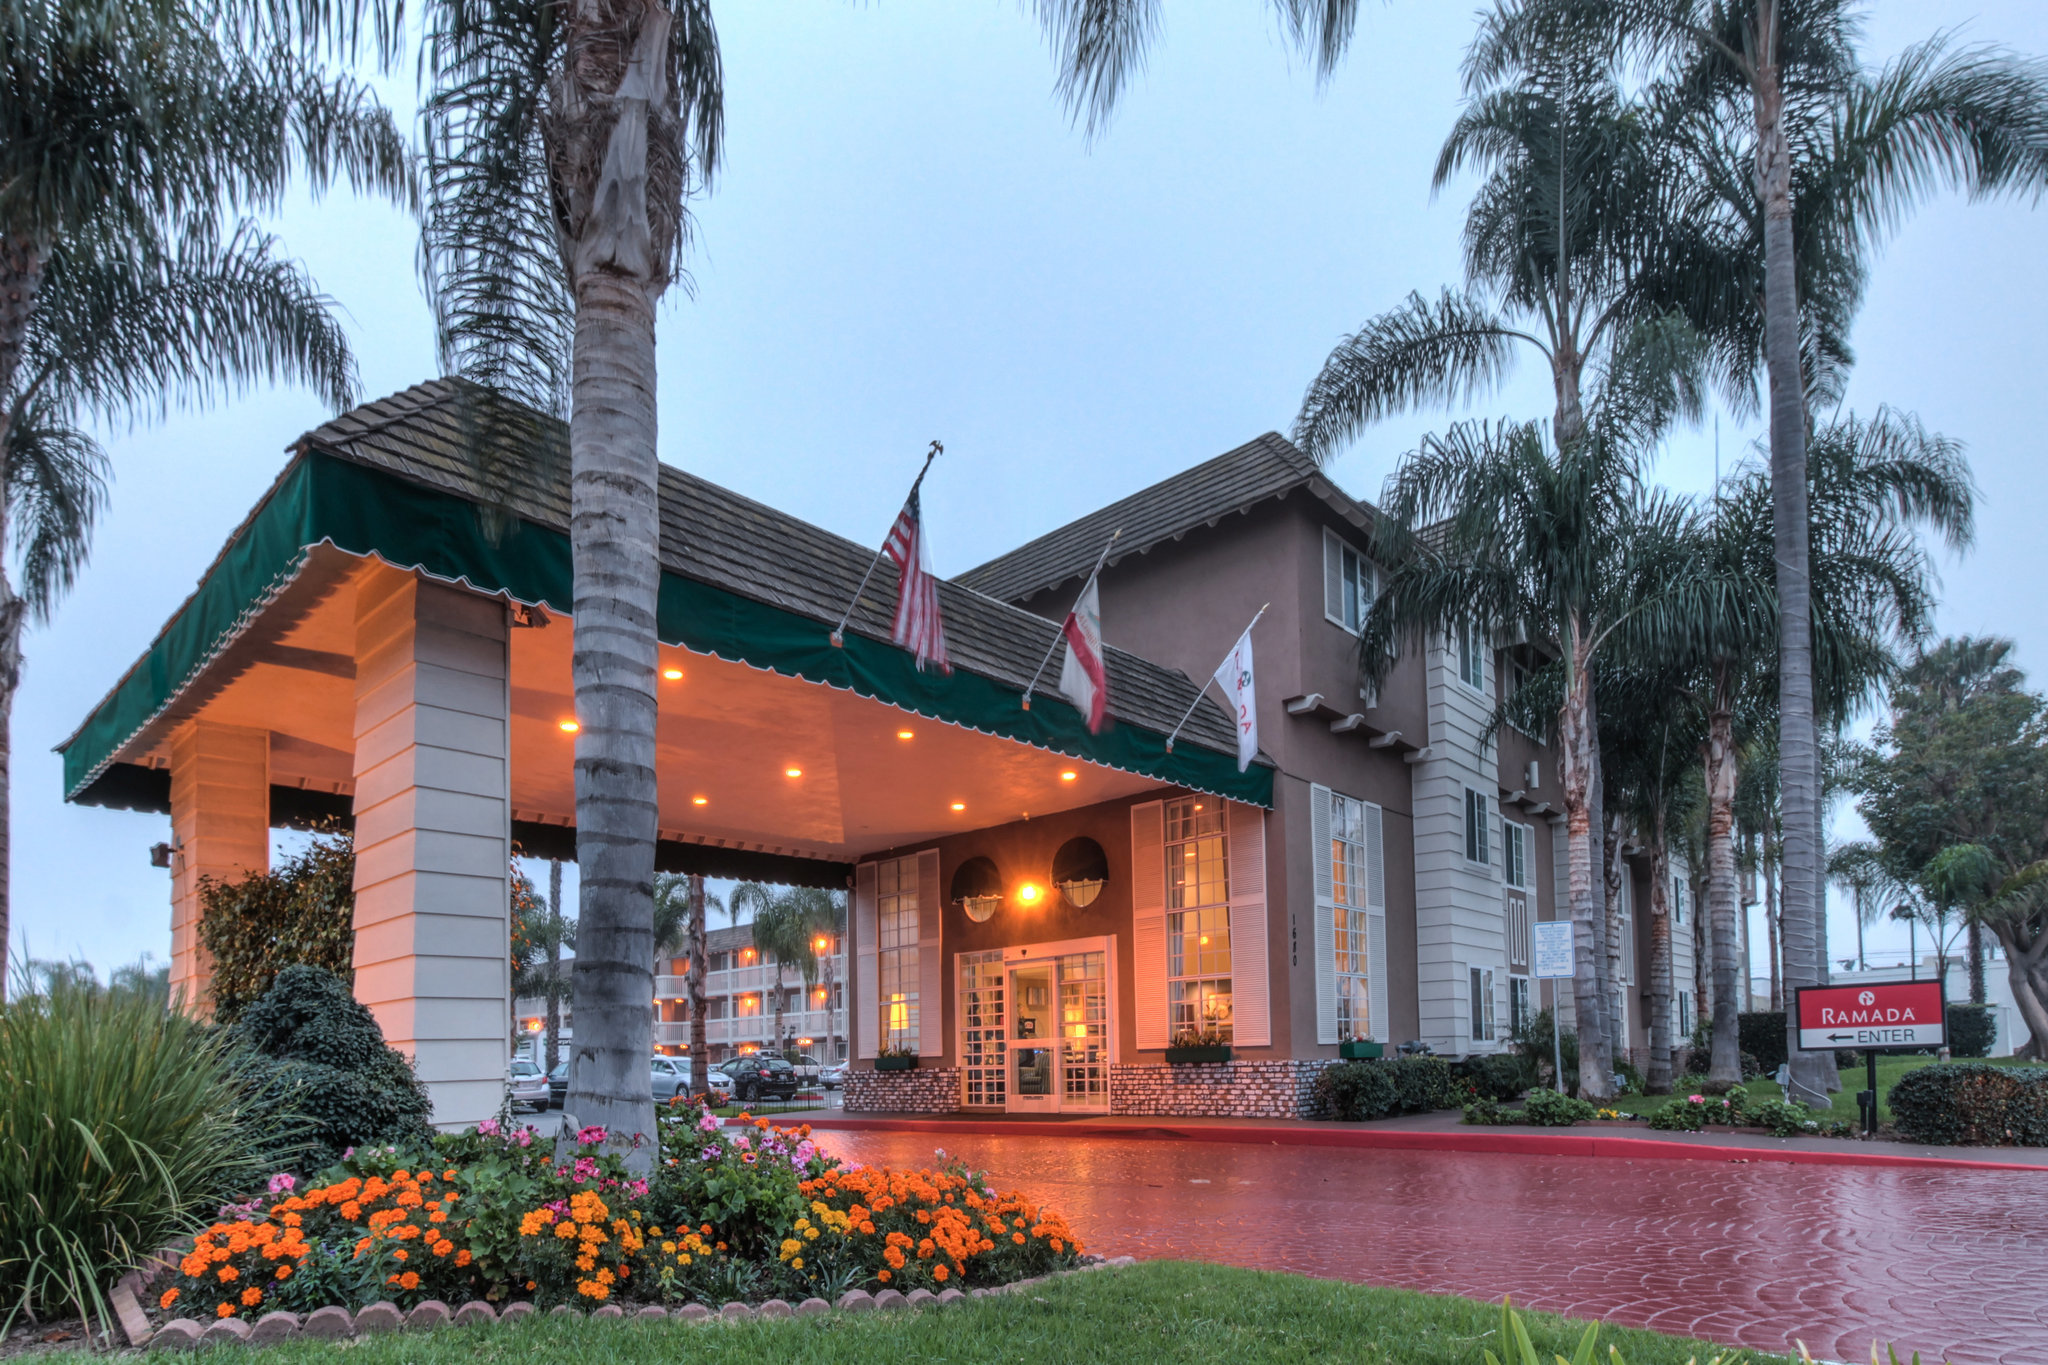 Photo of Ramada Inn And Suites Costa Mesa/Newport Beach, Costa Mesa, CA